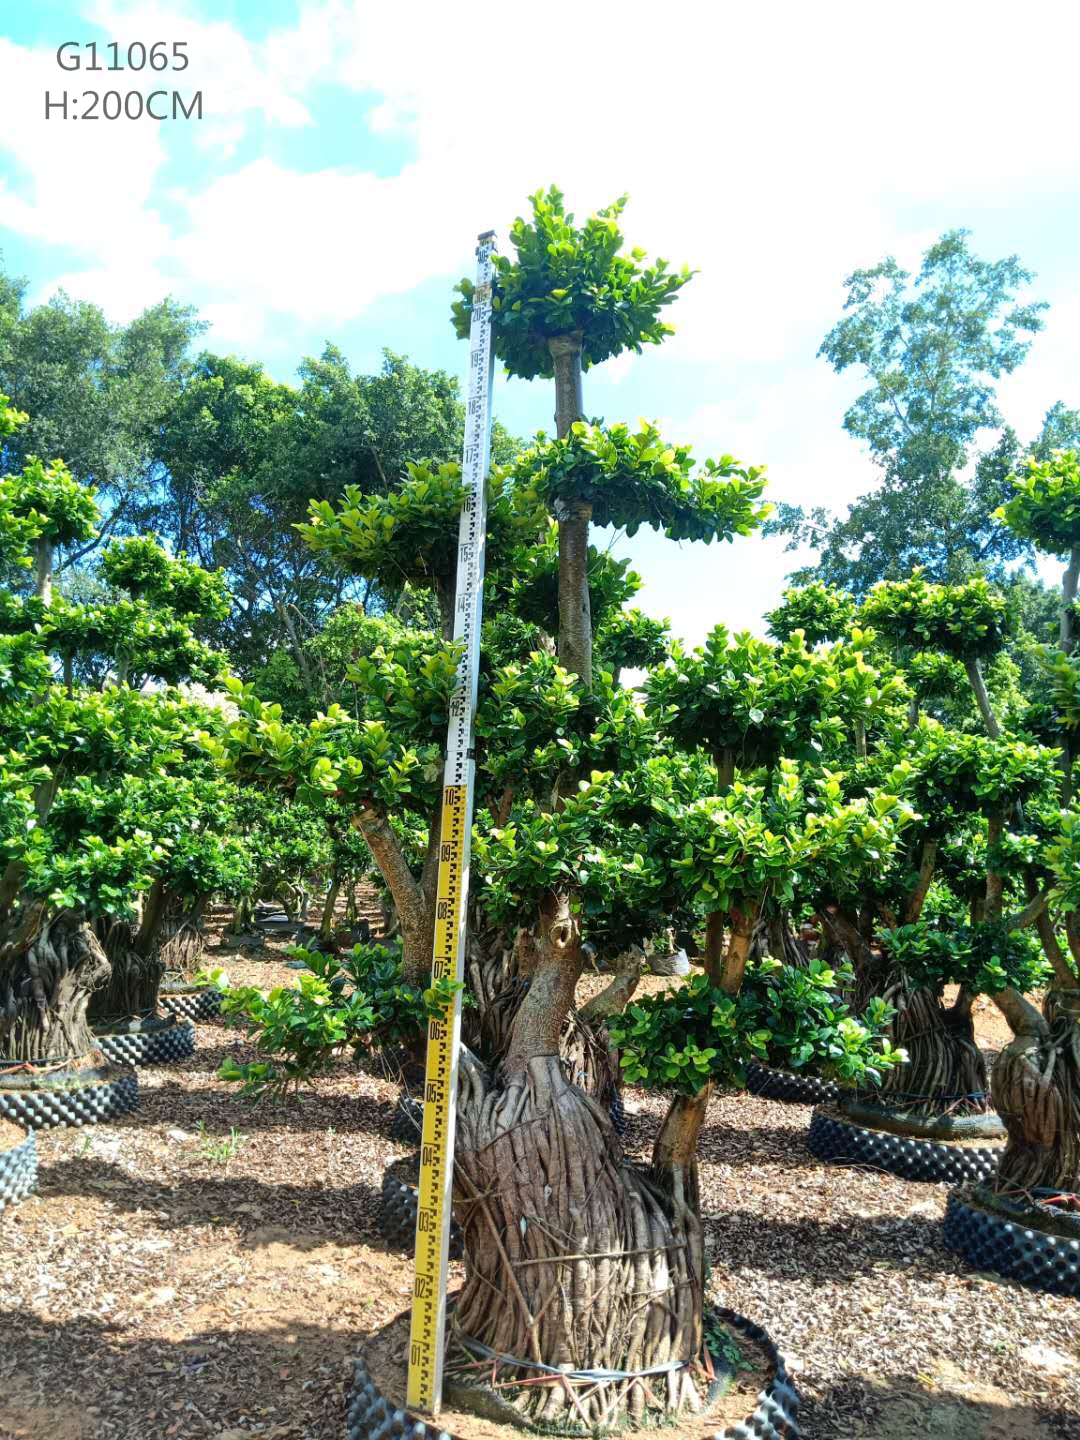 H150-210cm Ficus Air Root S Girman Ficus Microcarpa Ficus Bonsai Tare da Kyakkyawan inganci